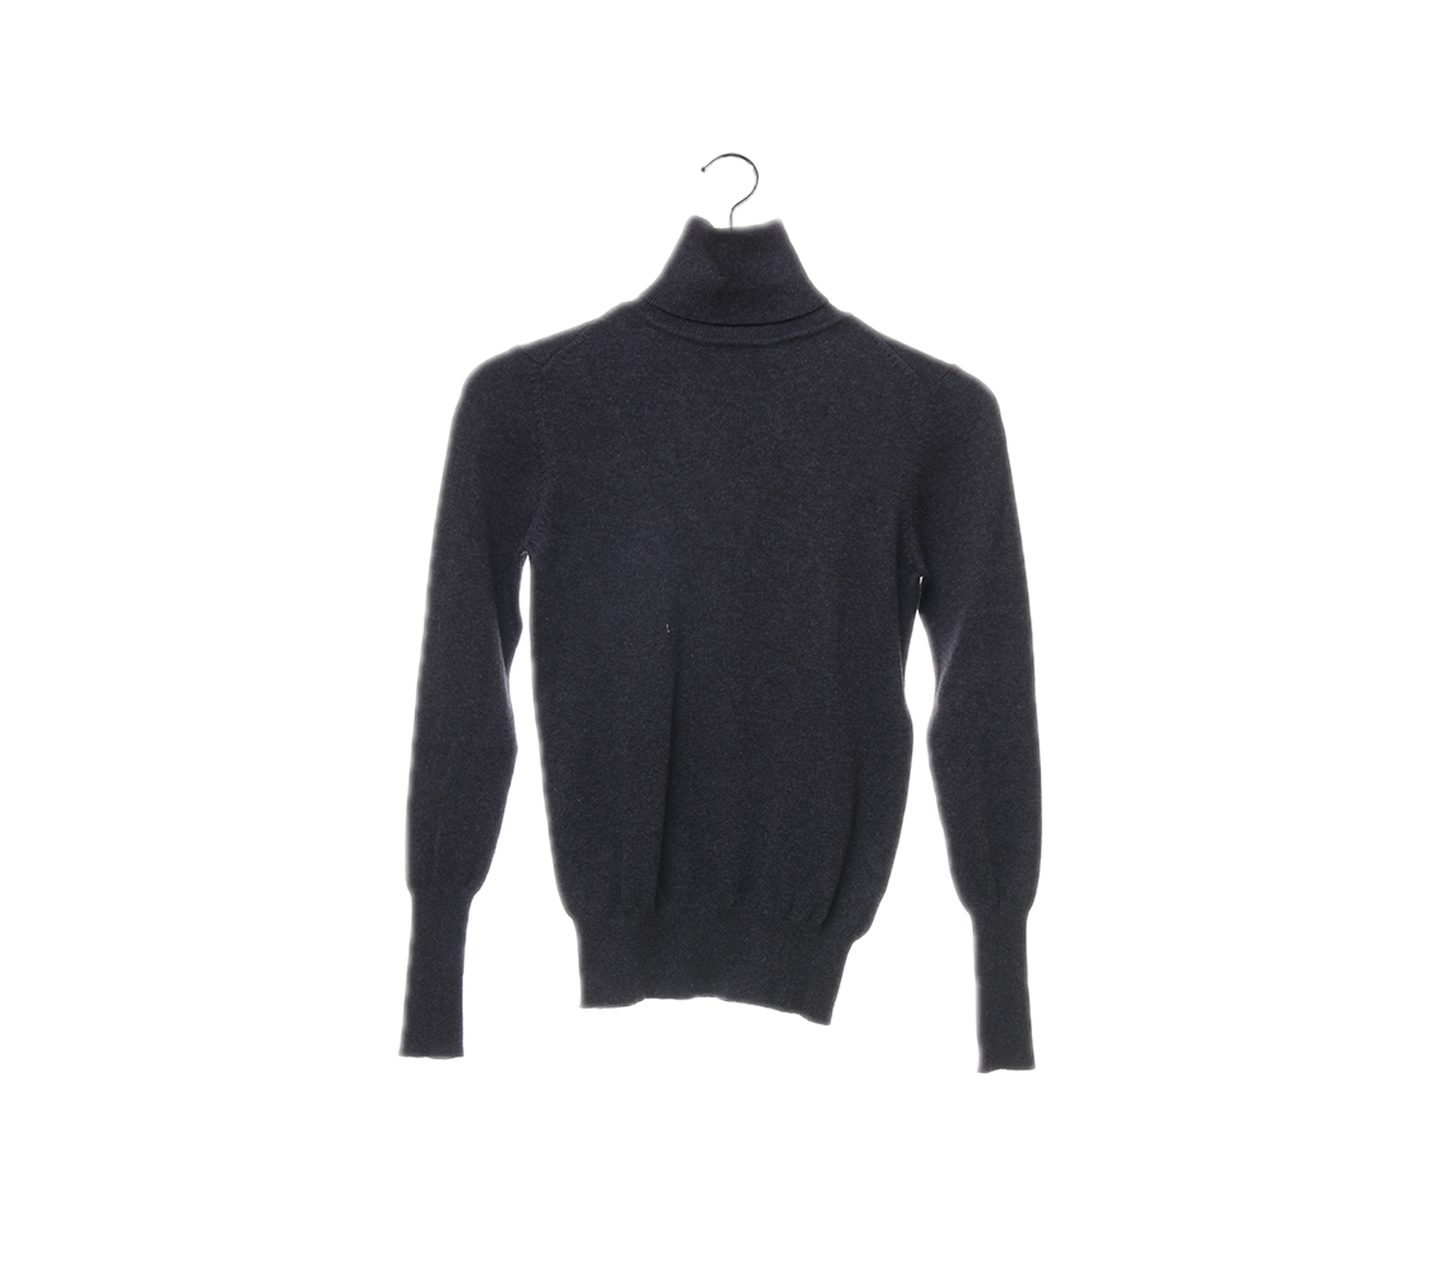 Zara Dark Grey Knit Turtle Neck Sweater